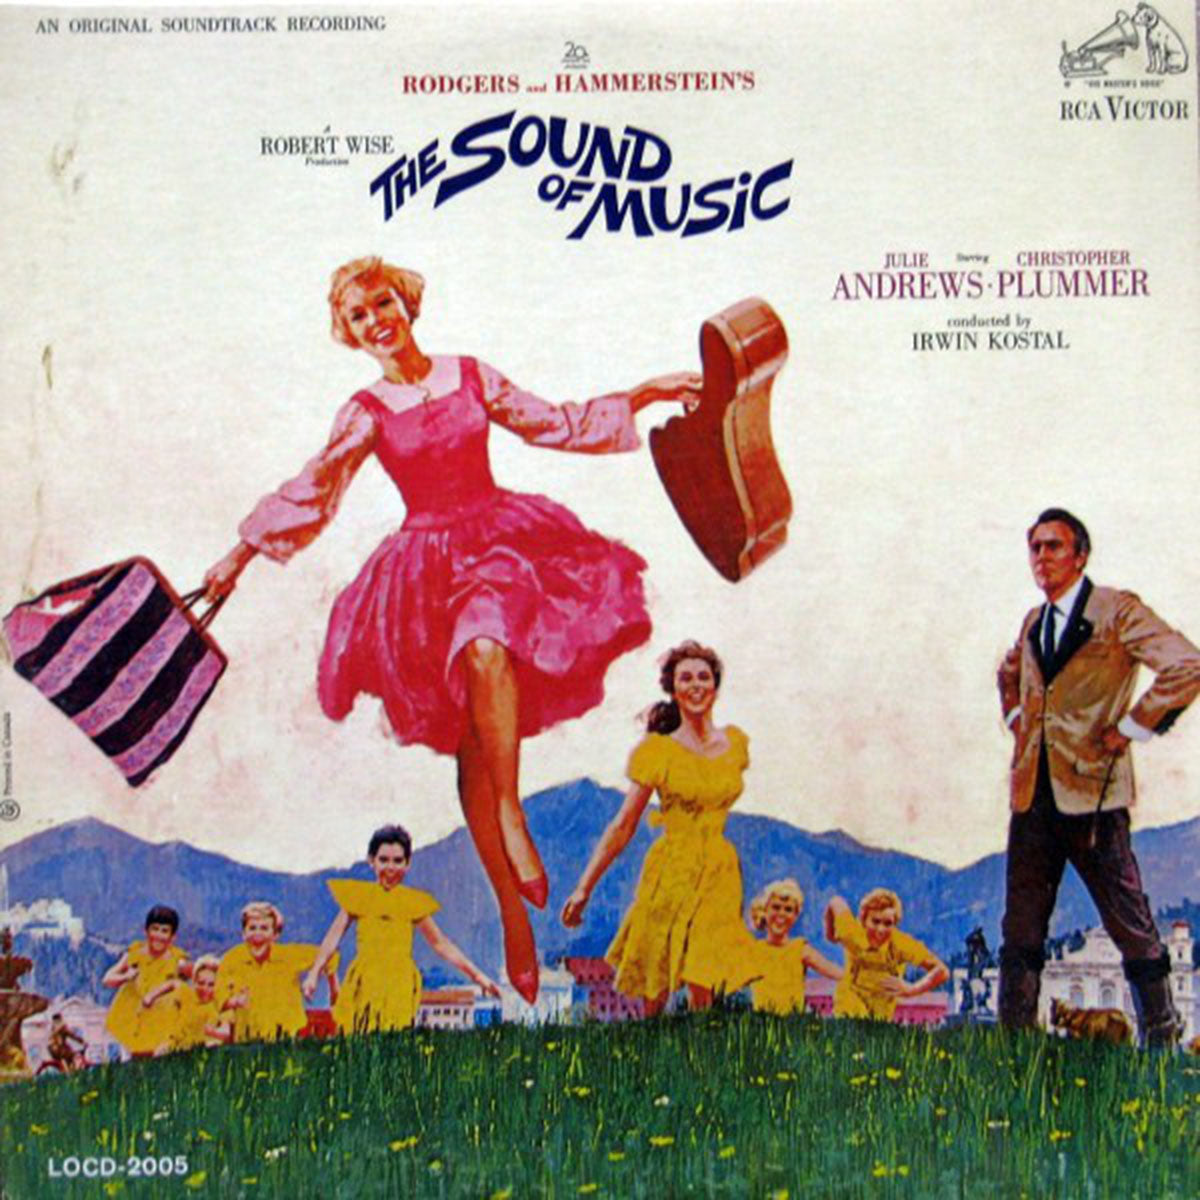 The Sound Of Music - Original Soundtrack Recording